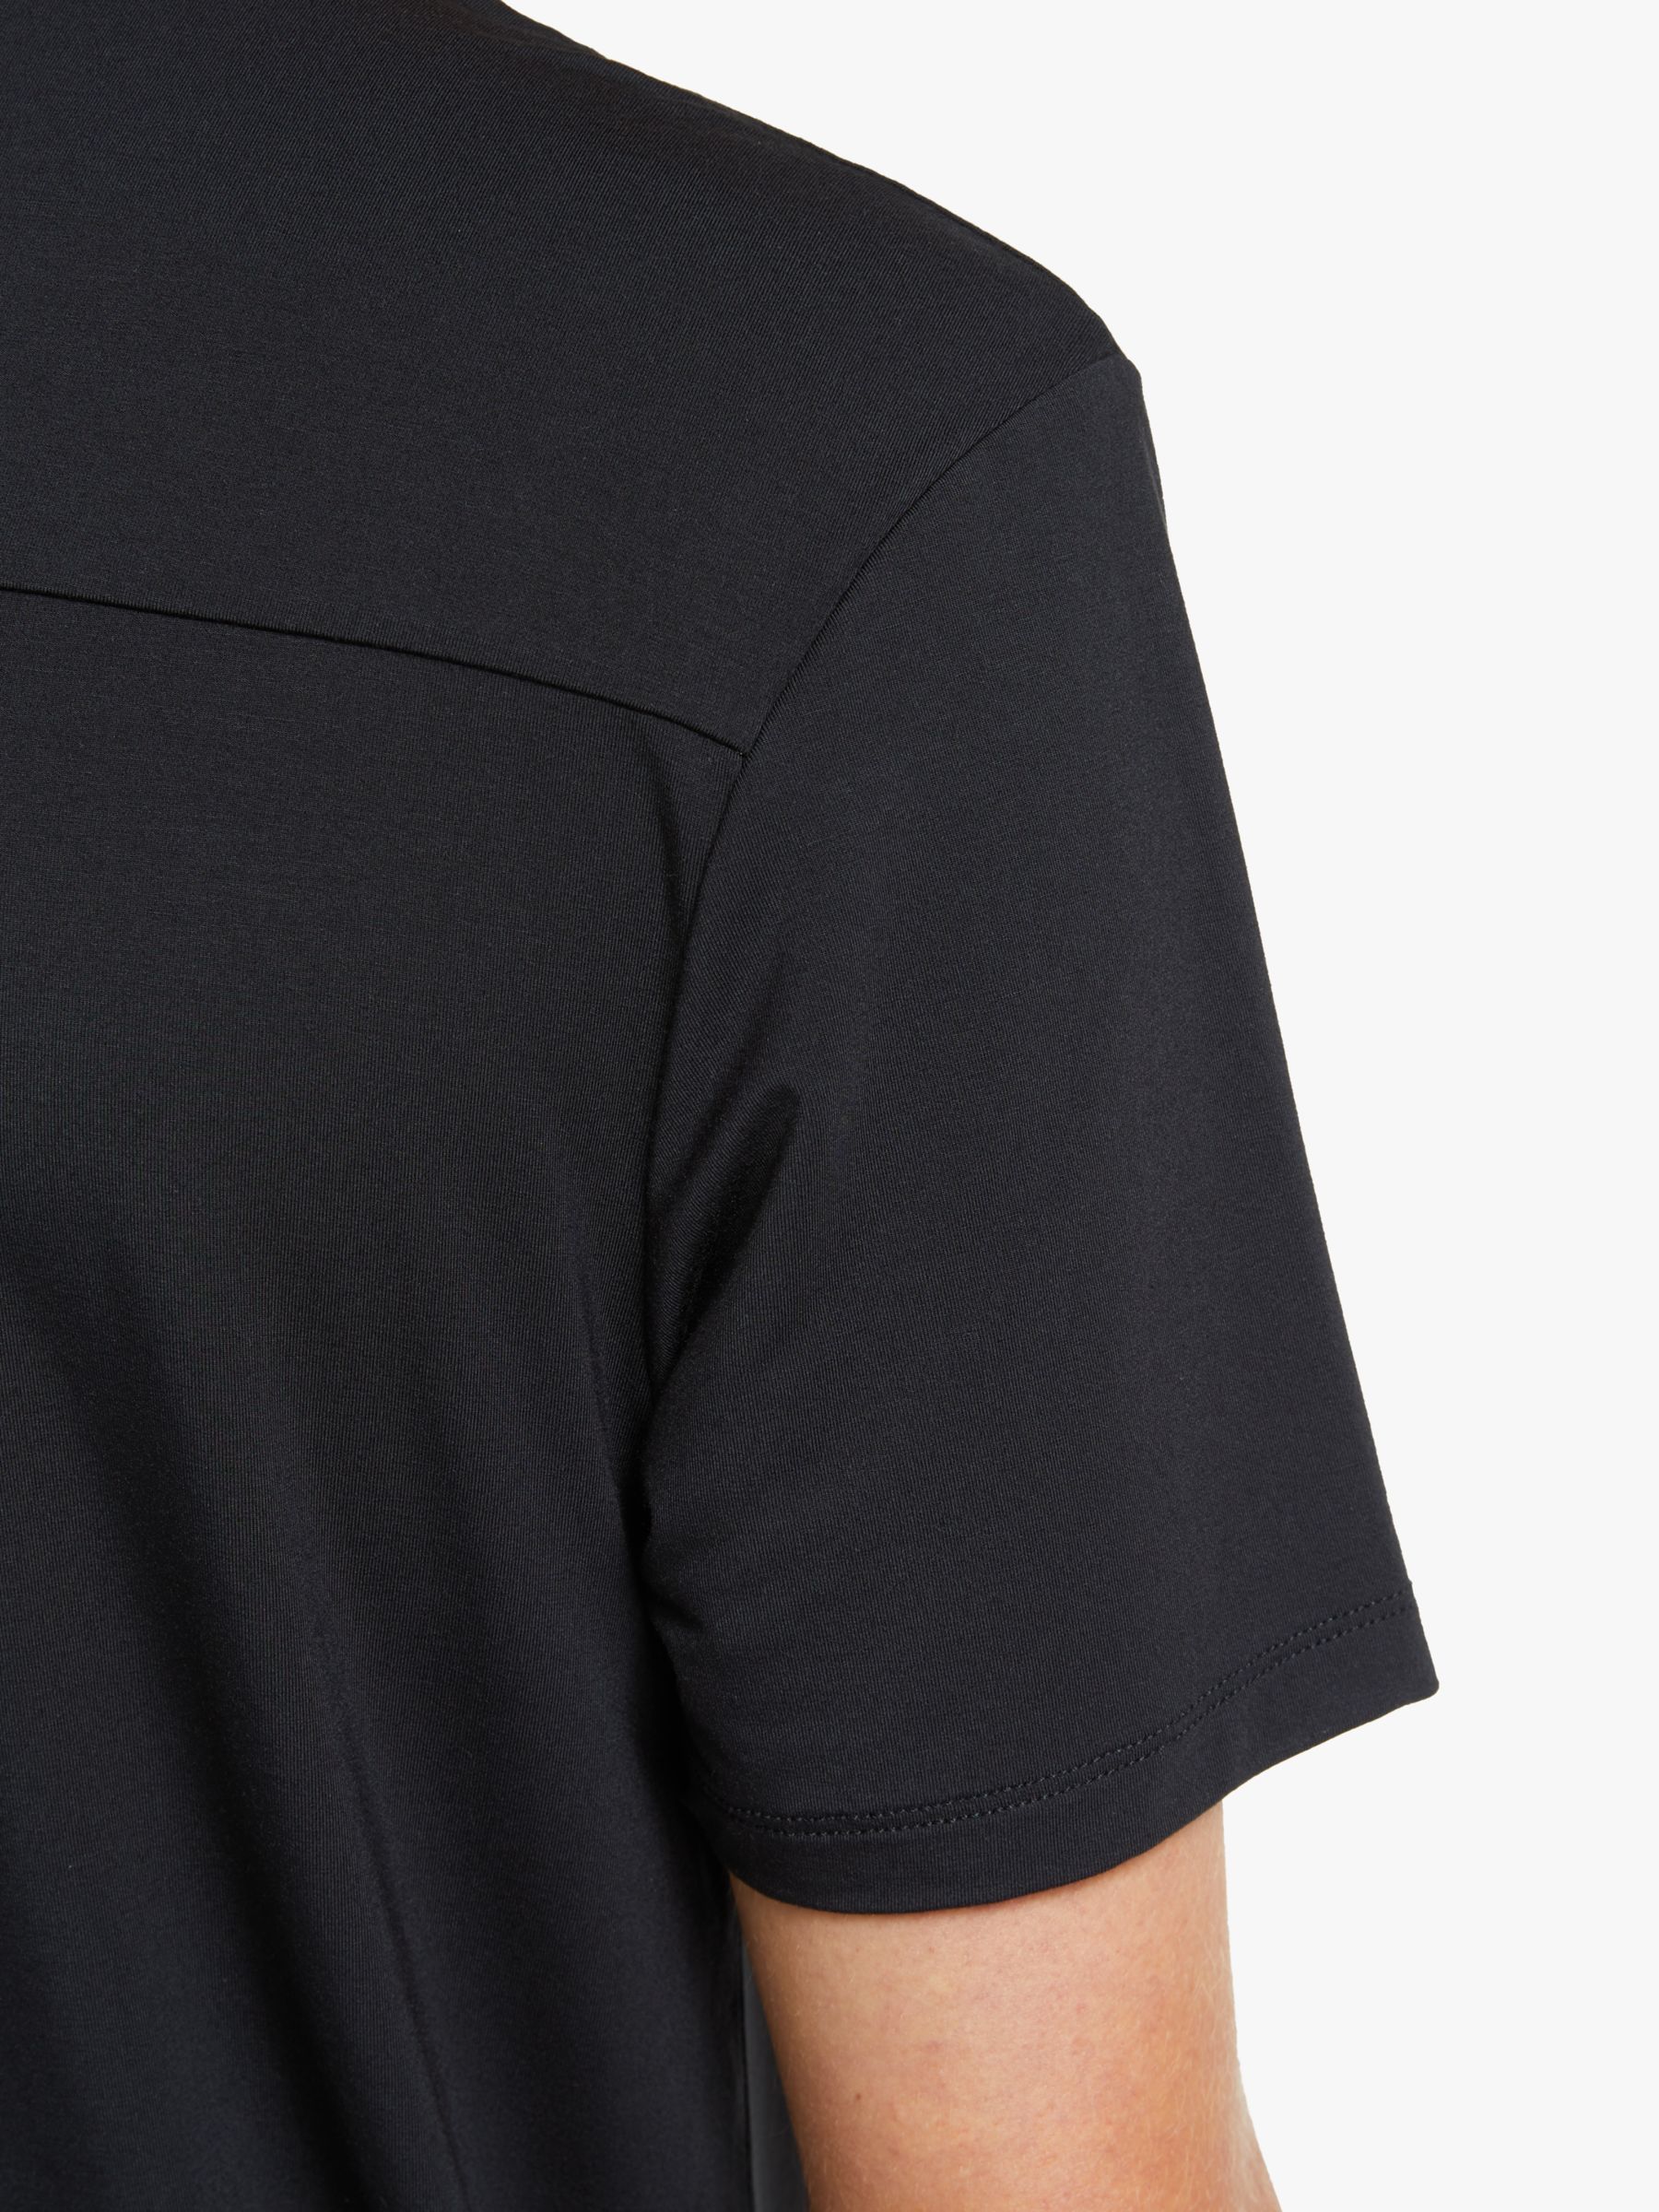 John Lewis Ultra Soft Modal Lounge Crew Neck T-Shirt, Black, S